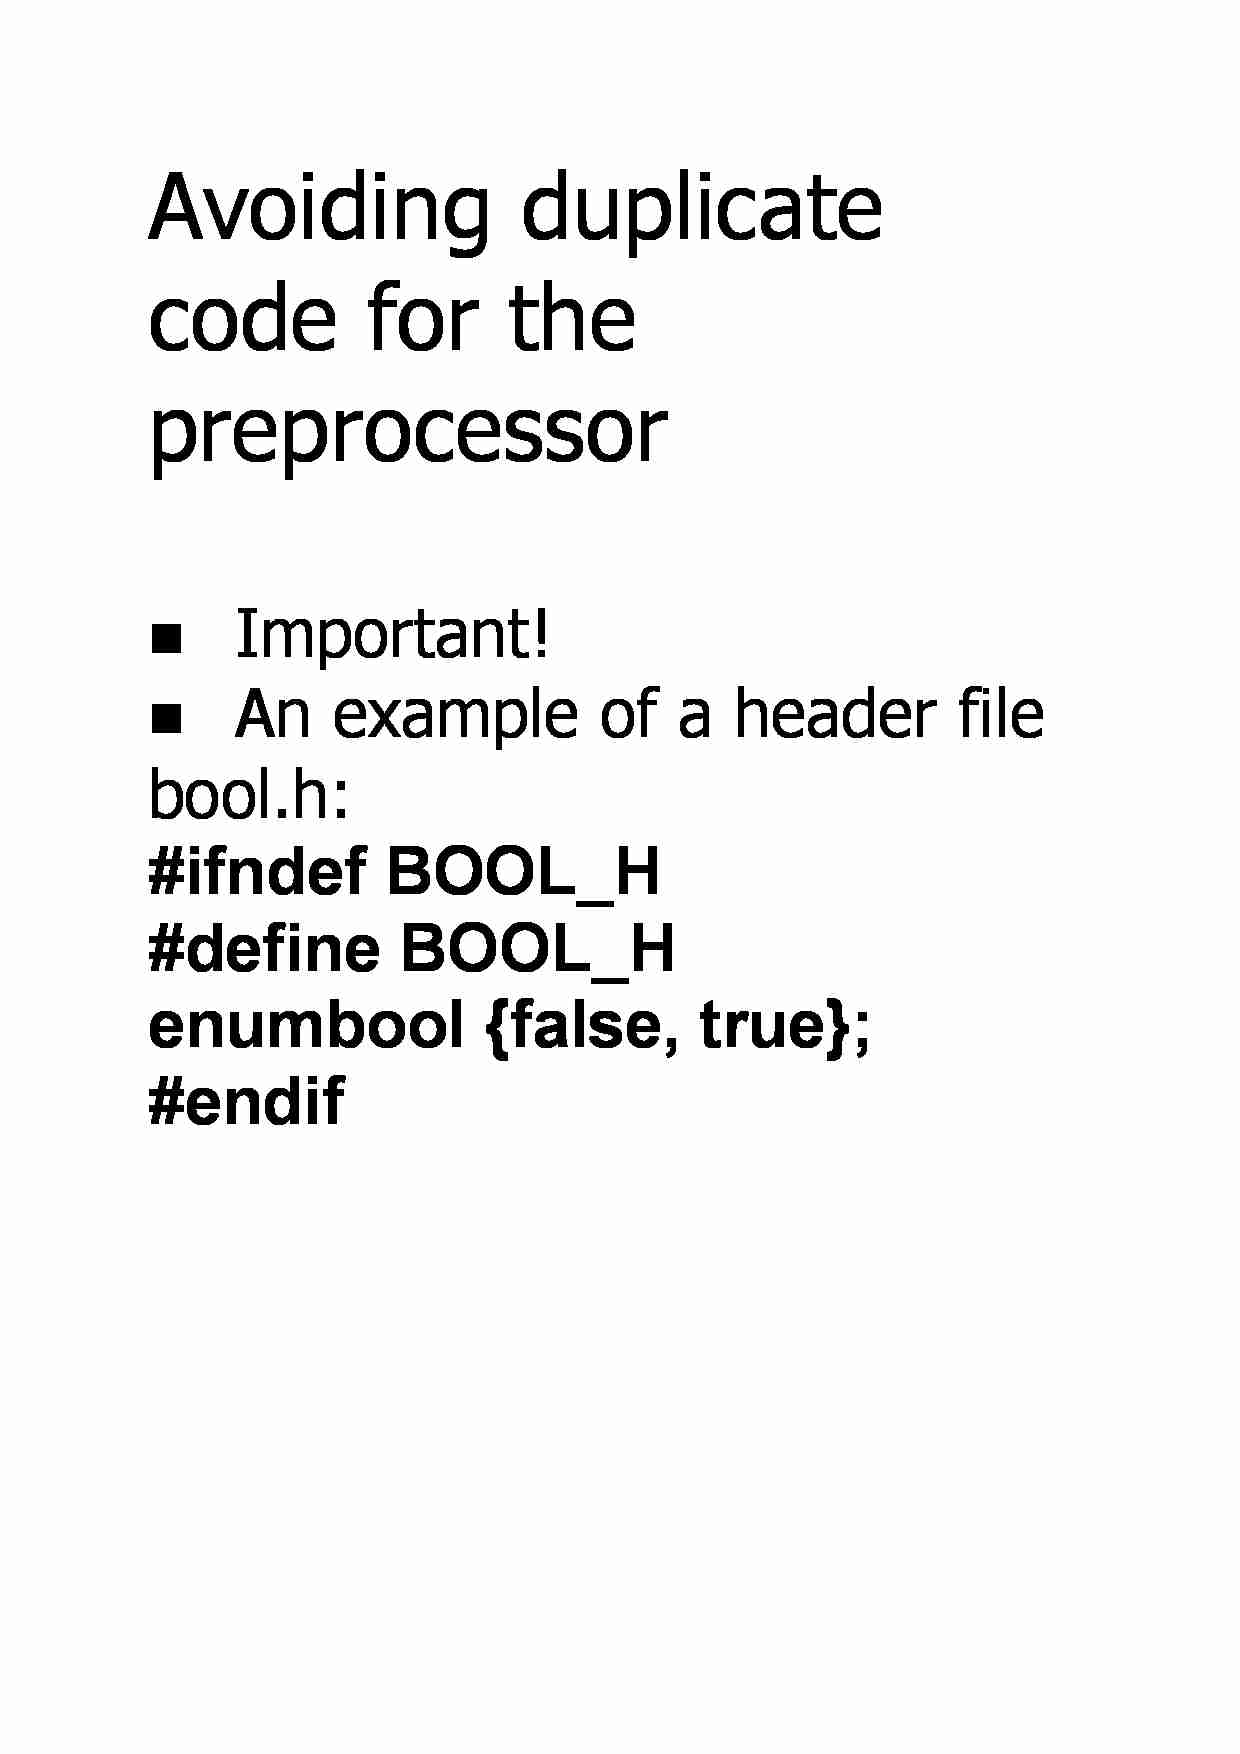 Avoiding duplicate code for the preprocessor - strona 1